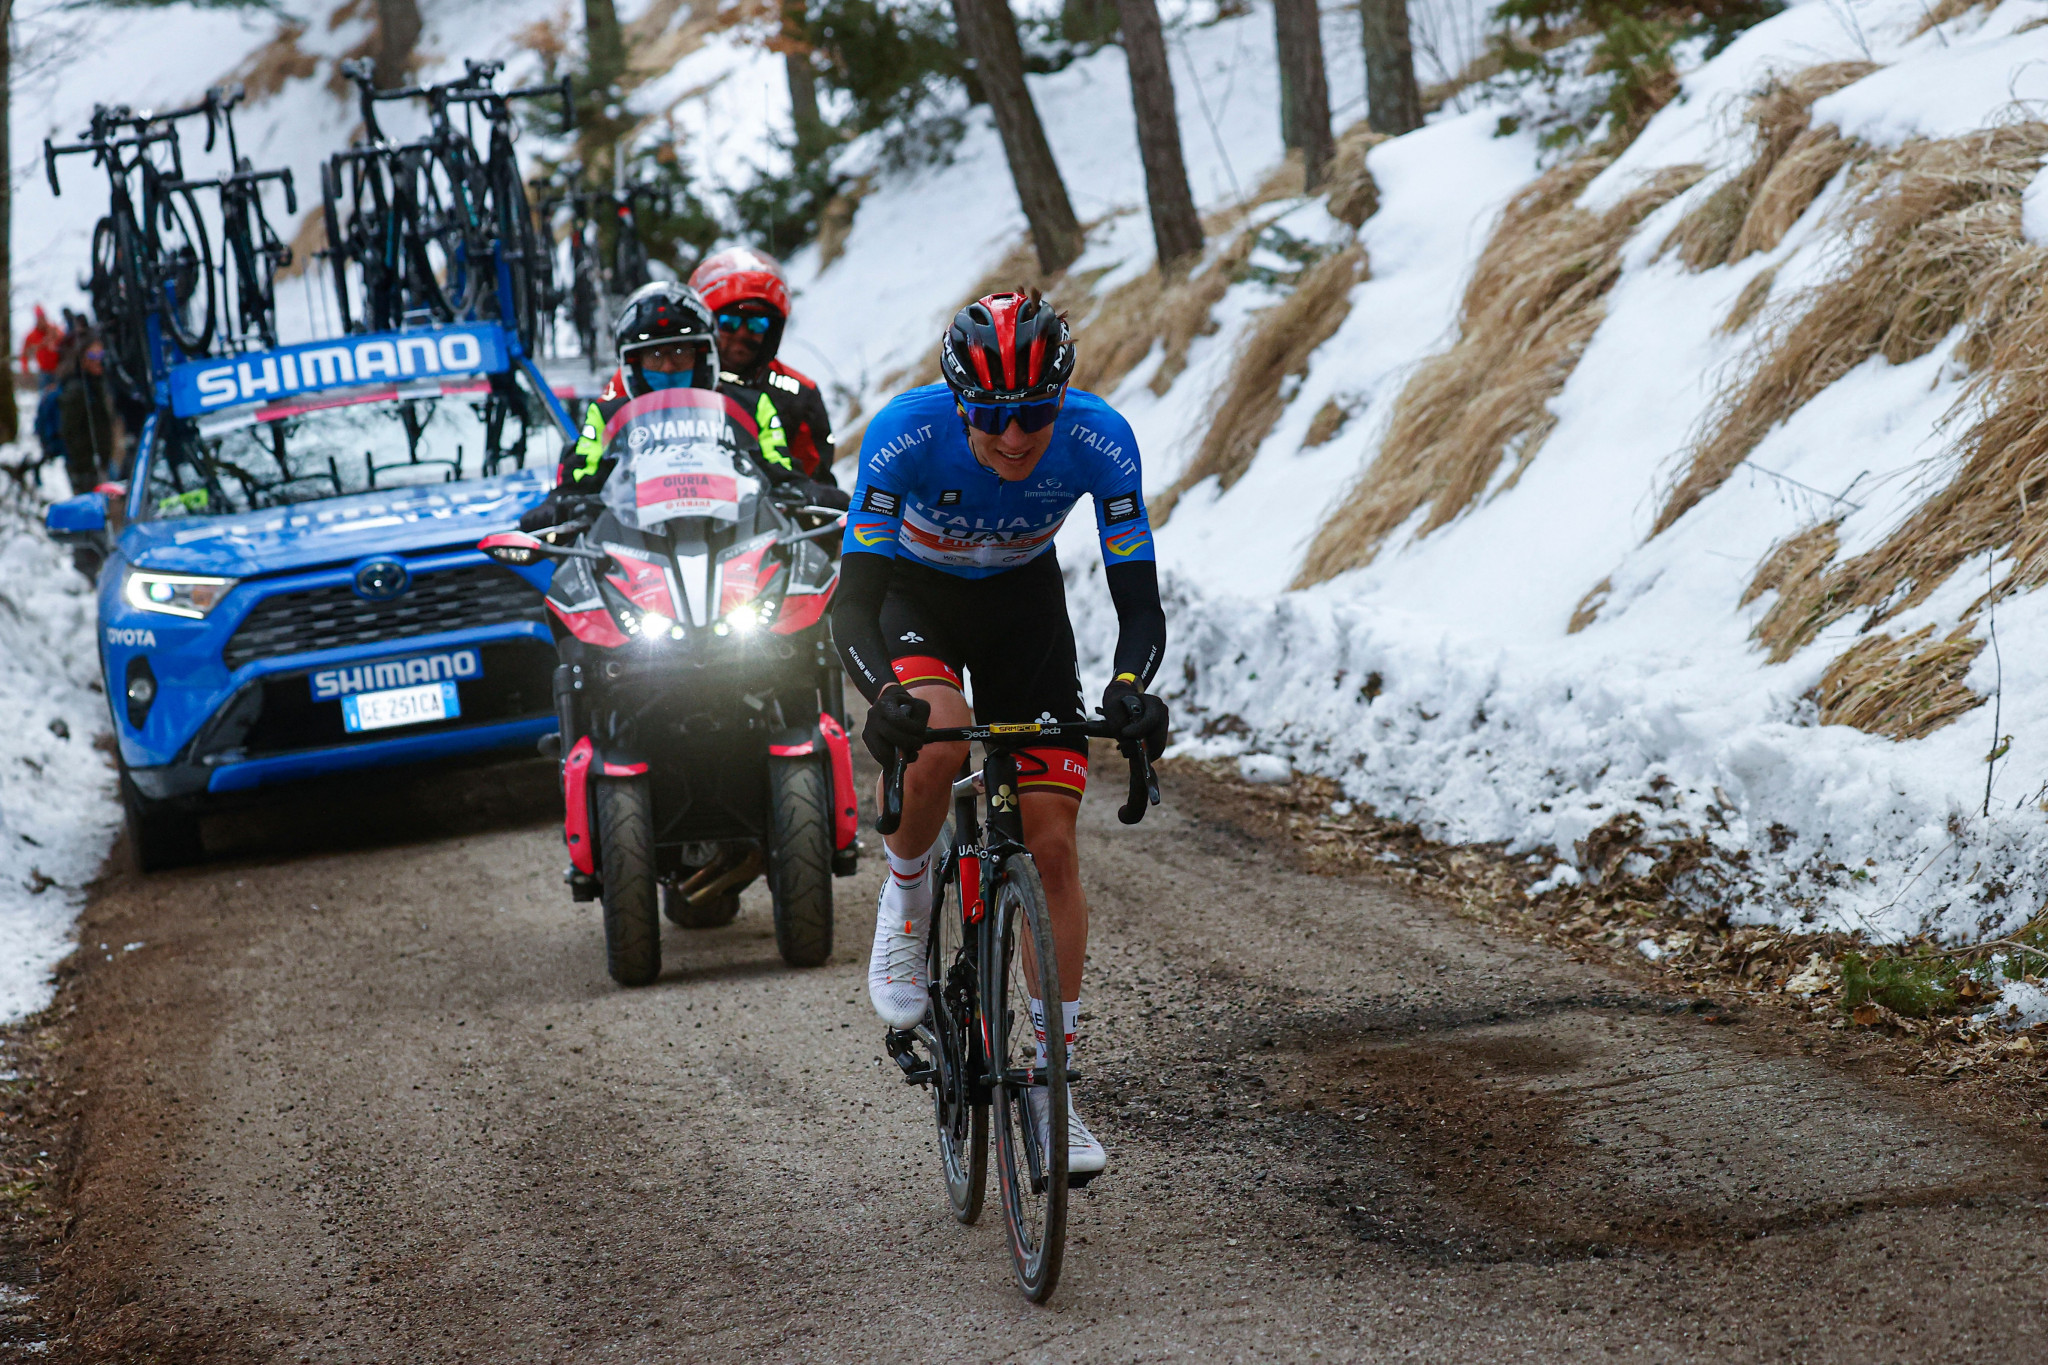 Pogačar strengthens Tirreno-Adriatico lead with solo win on sixth stage